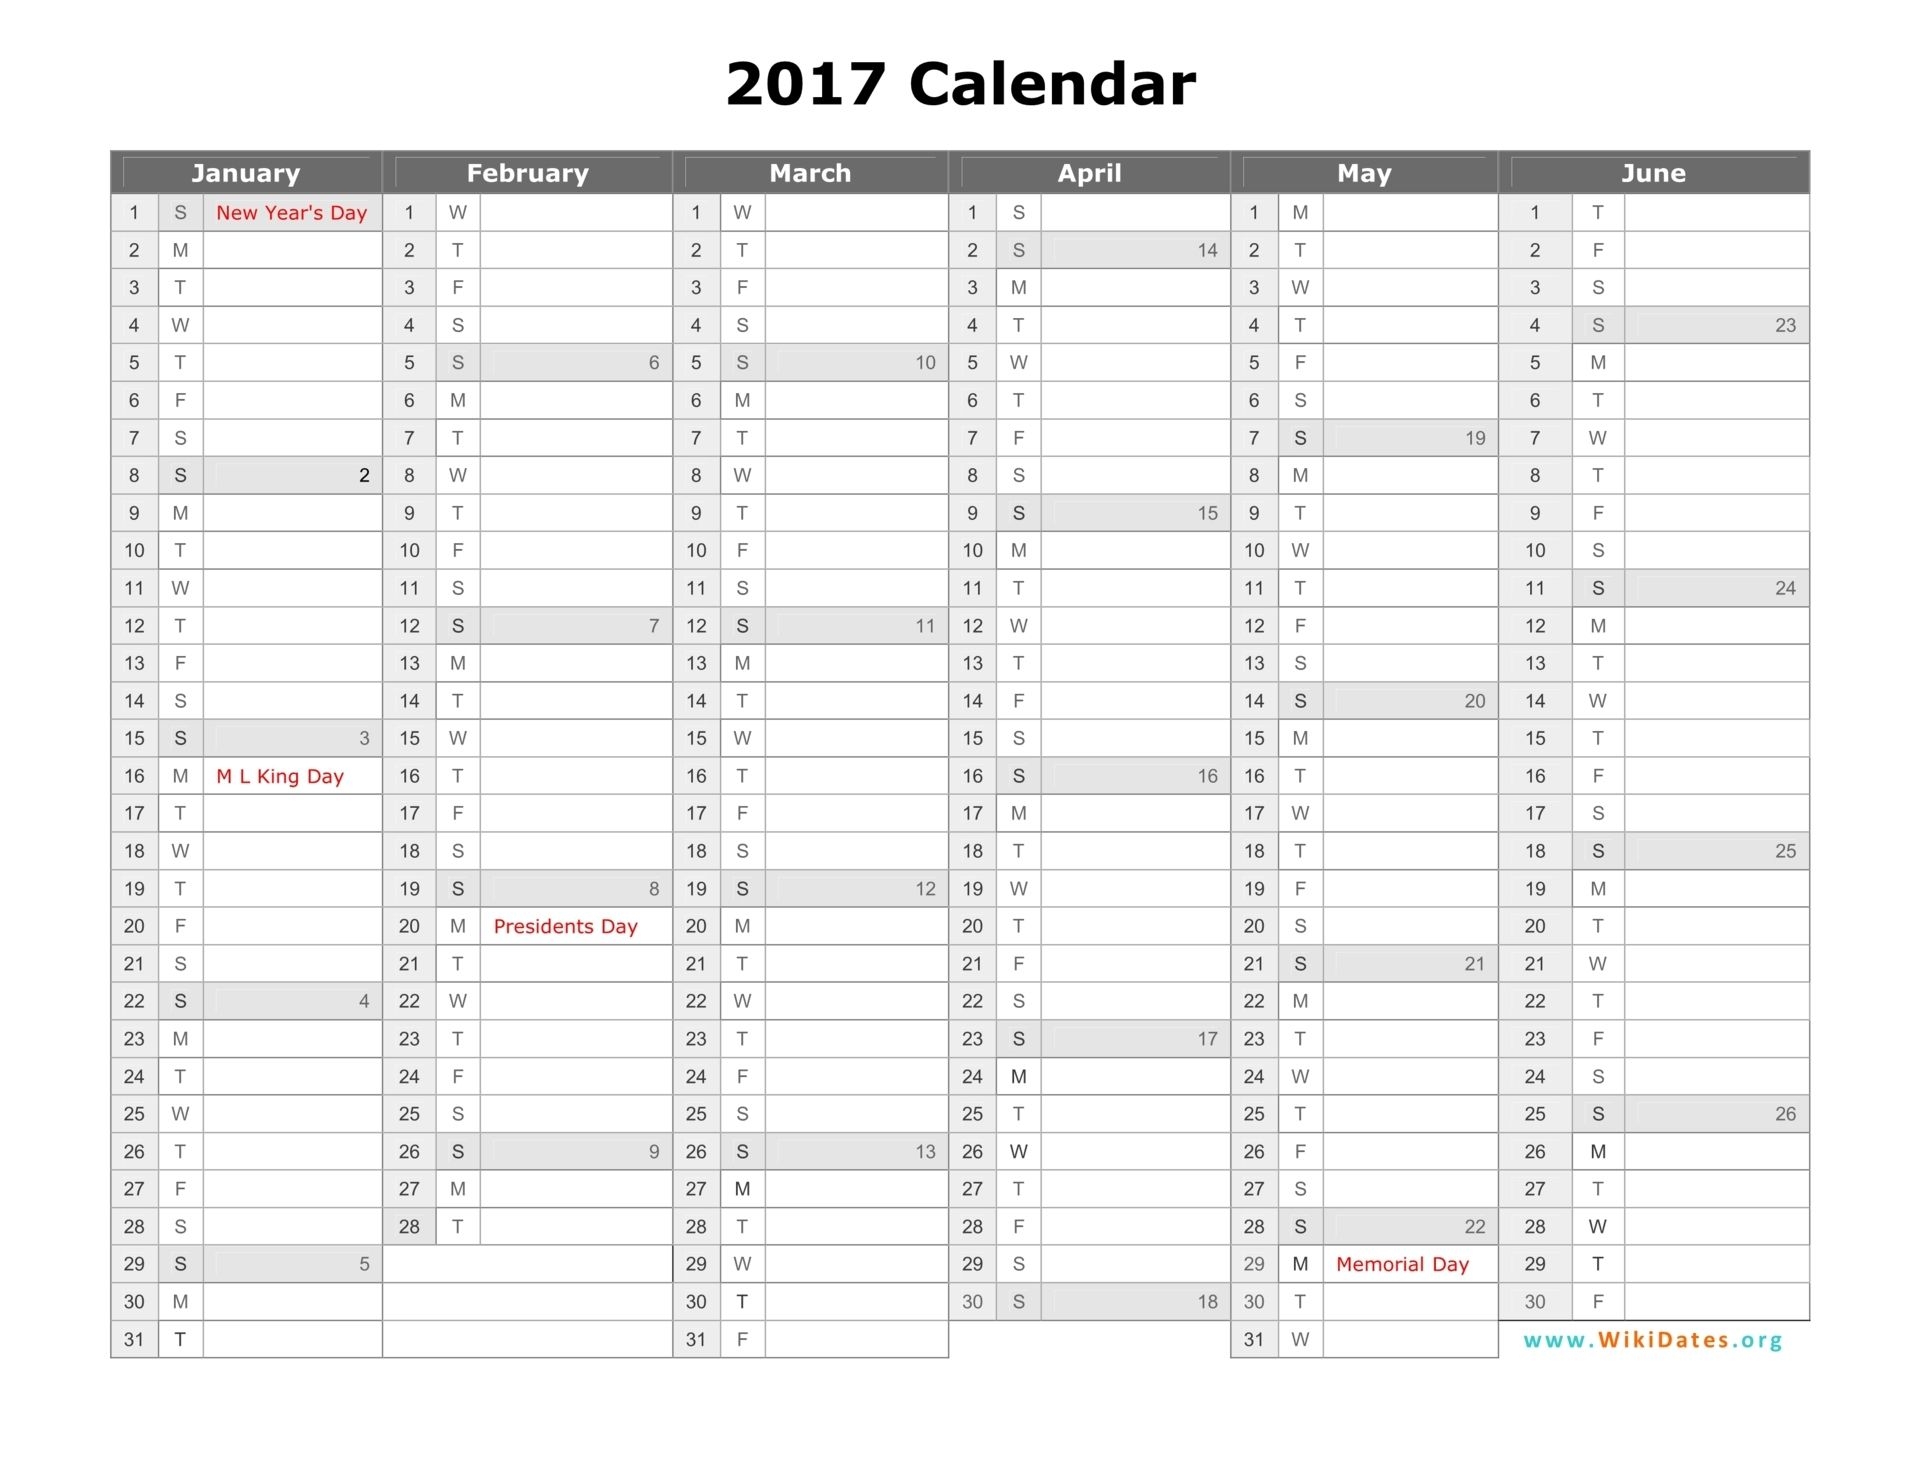 2017 Calendar | Wikidates